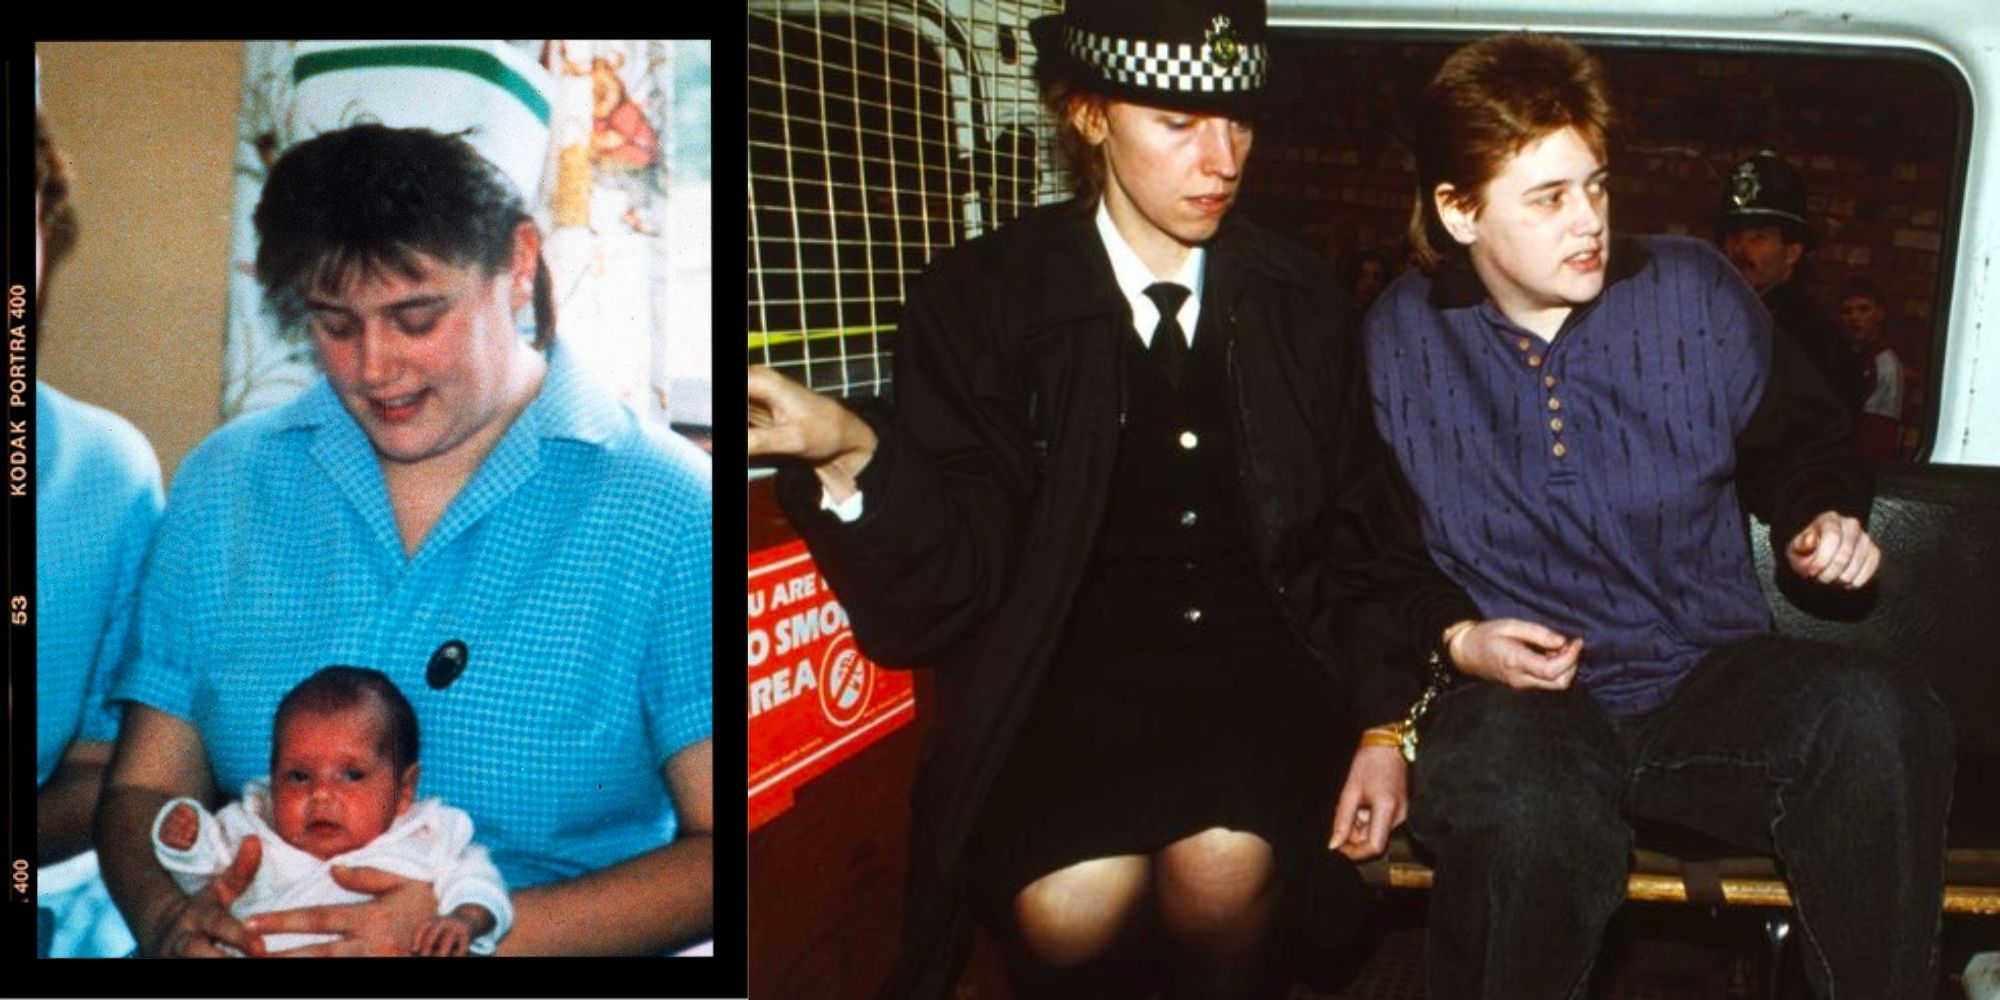 Beverley Allitt British Serial Killer in nursing uniform holding baby and under arrest in police van